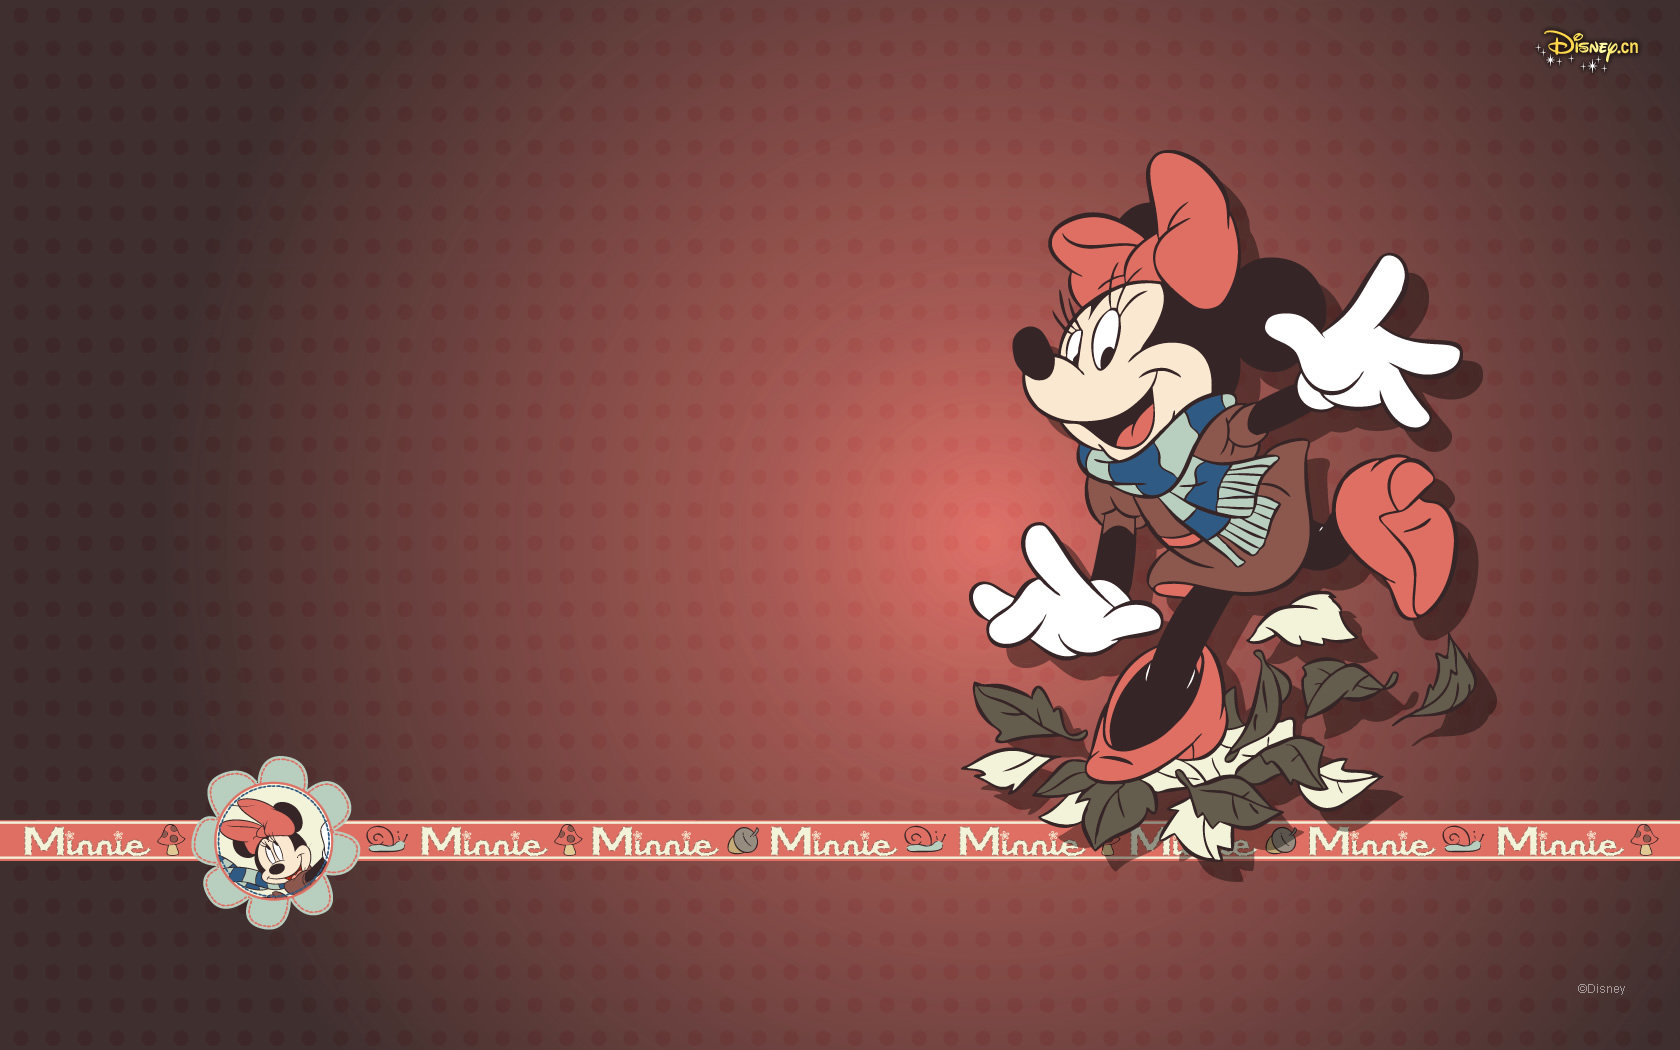 Minnie Mouse wallpapers 1680x1050 desktop backgrounds 1680x1050